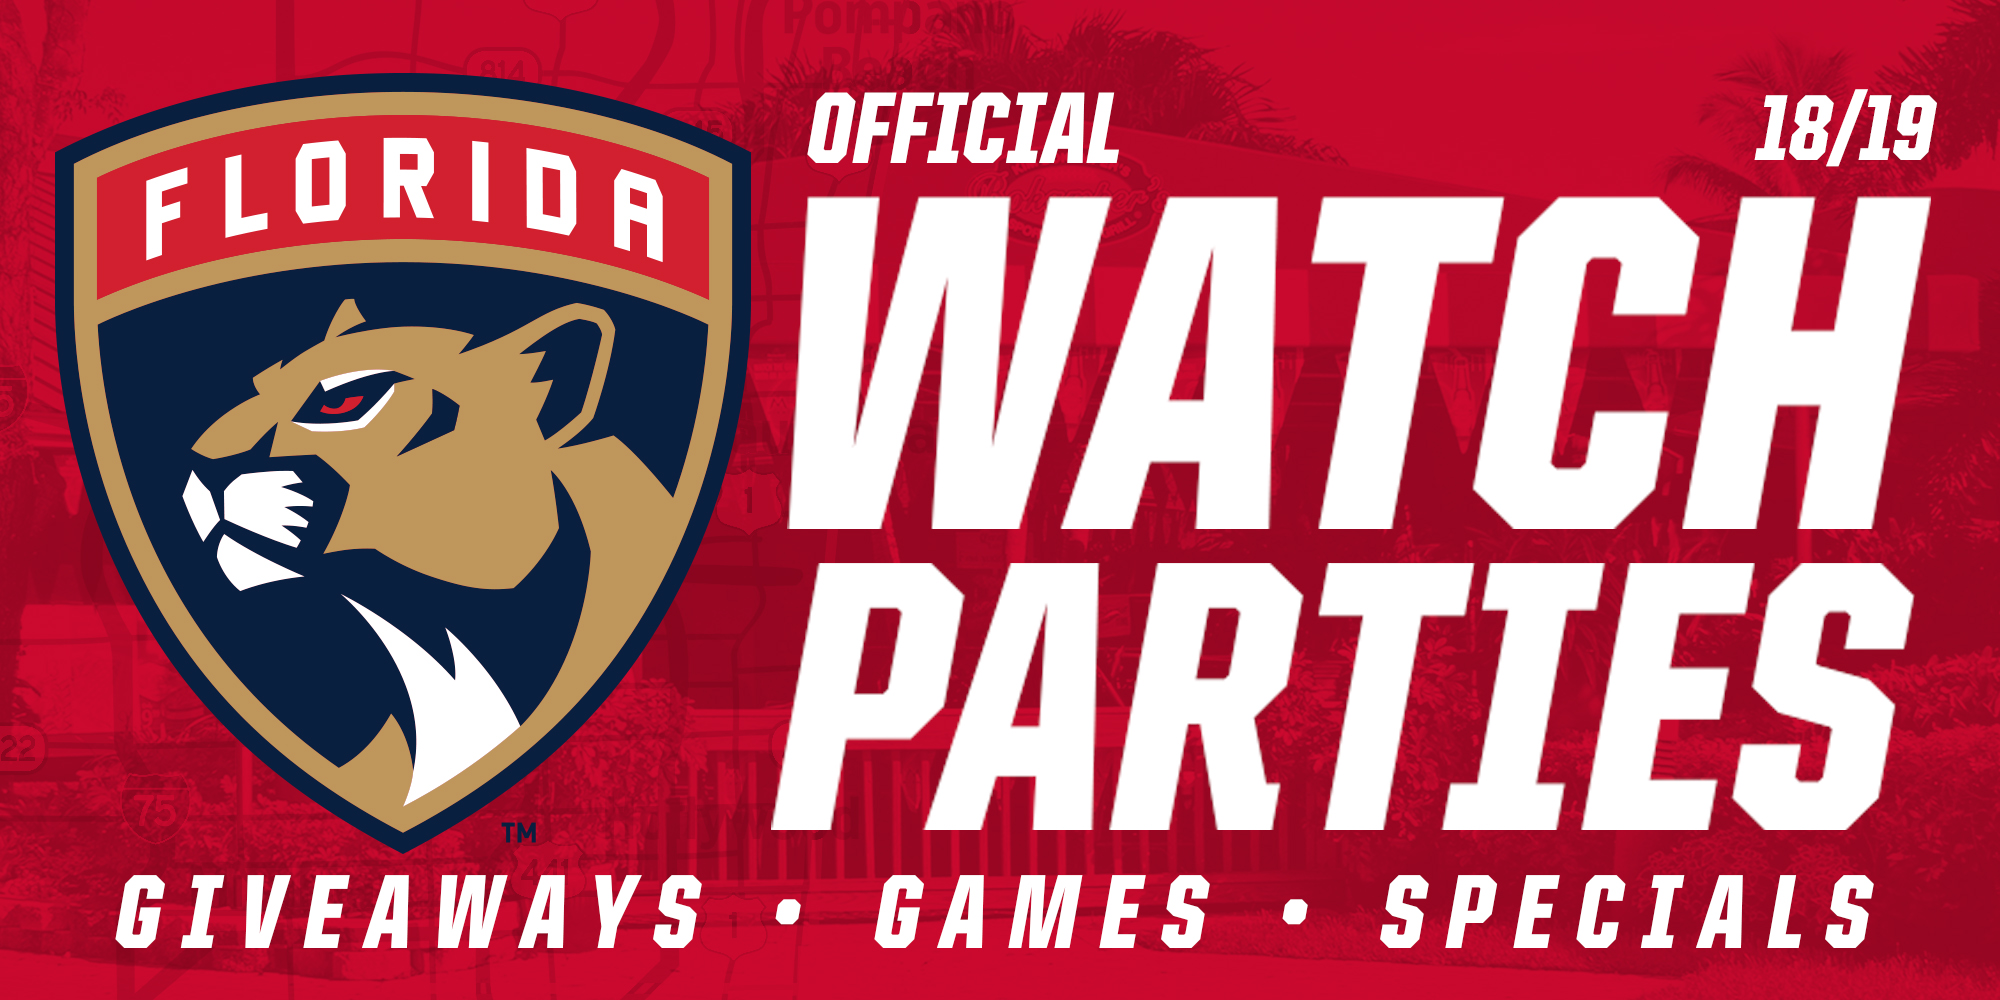 Florida Panthers Official Watch Parties logo